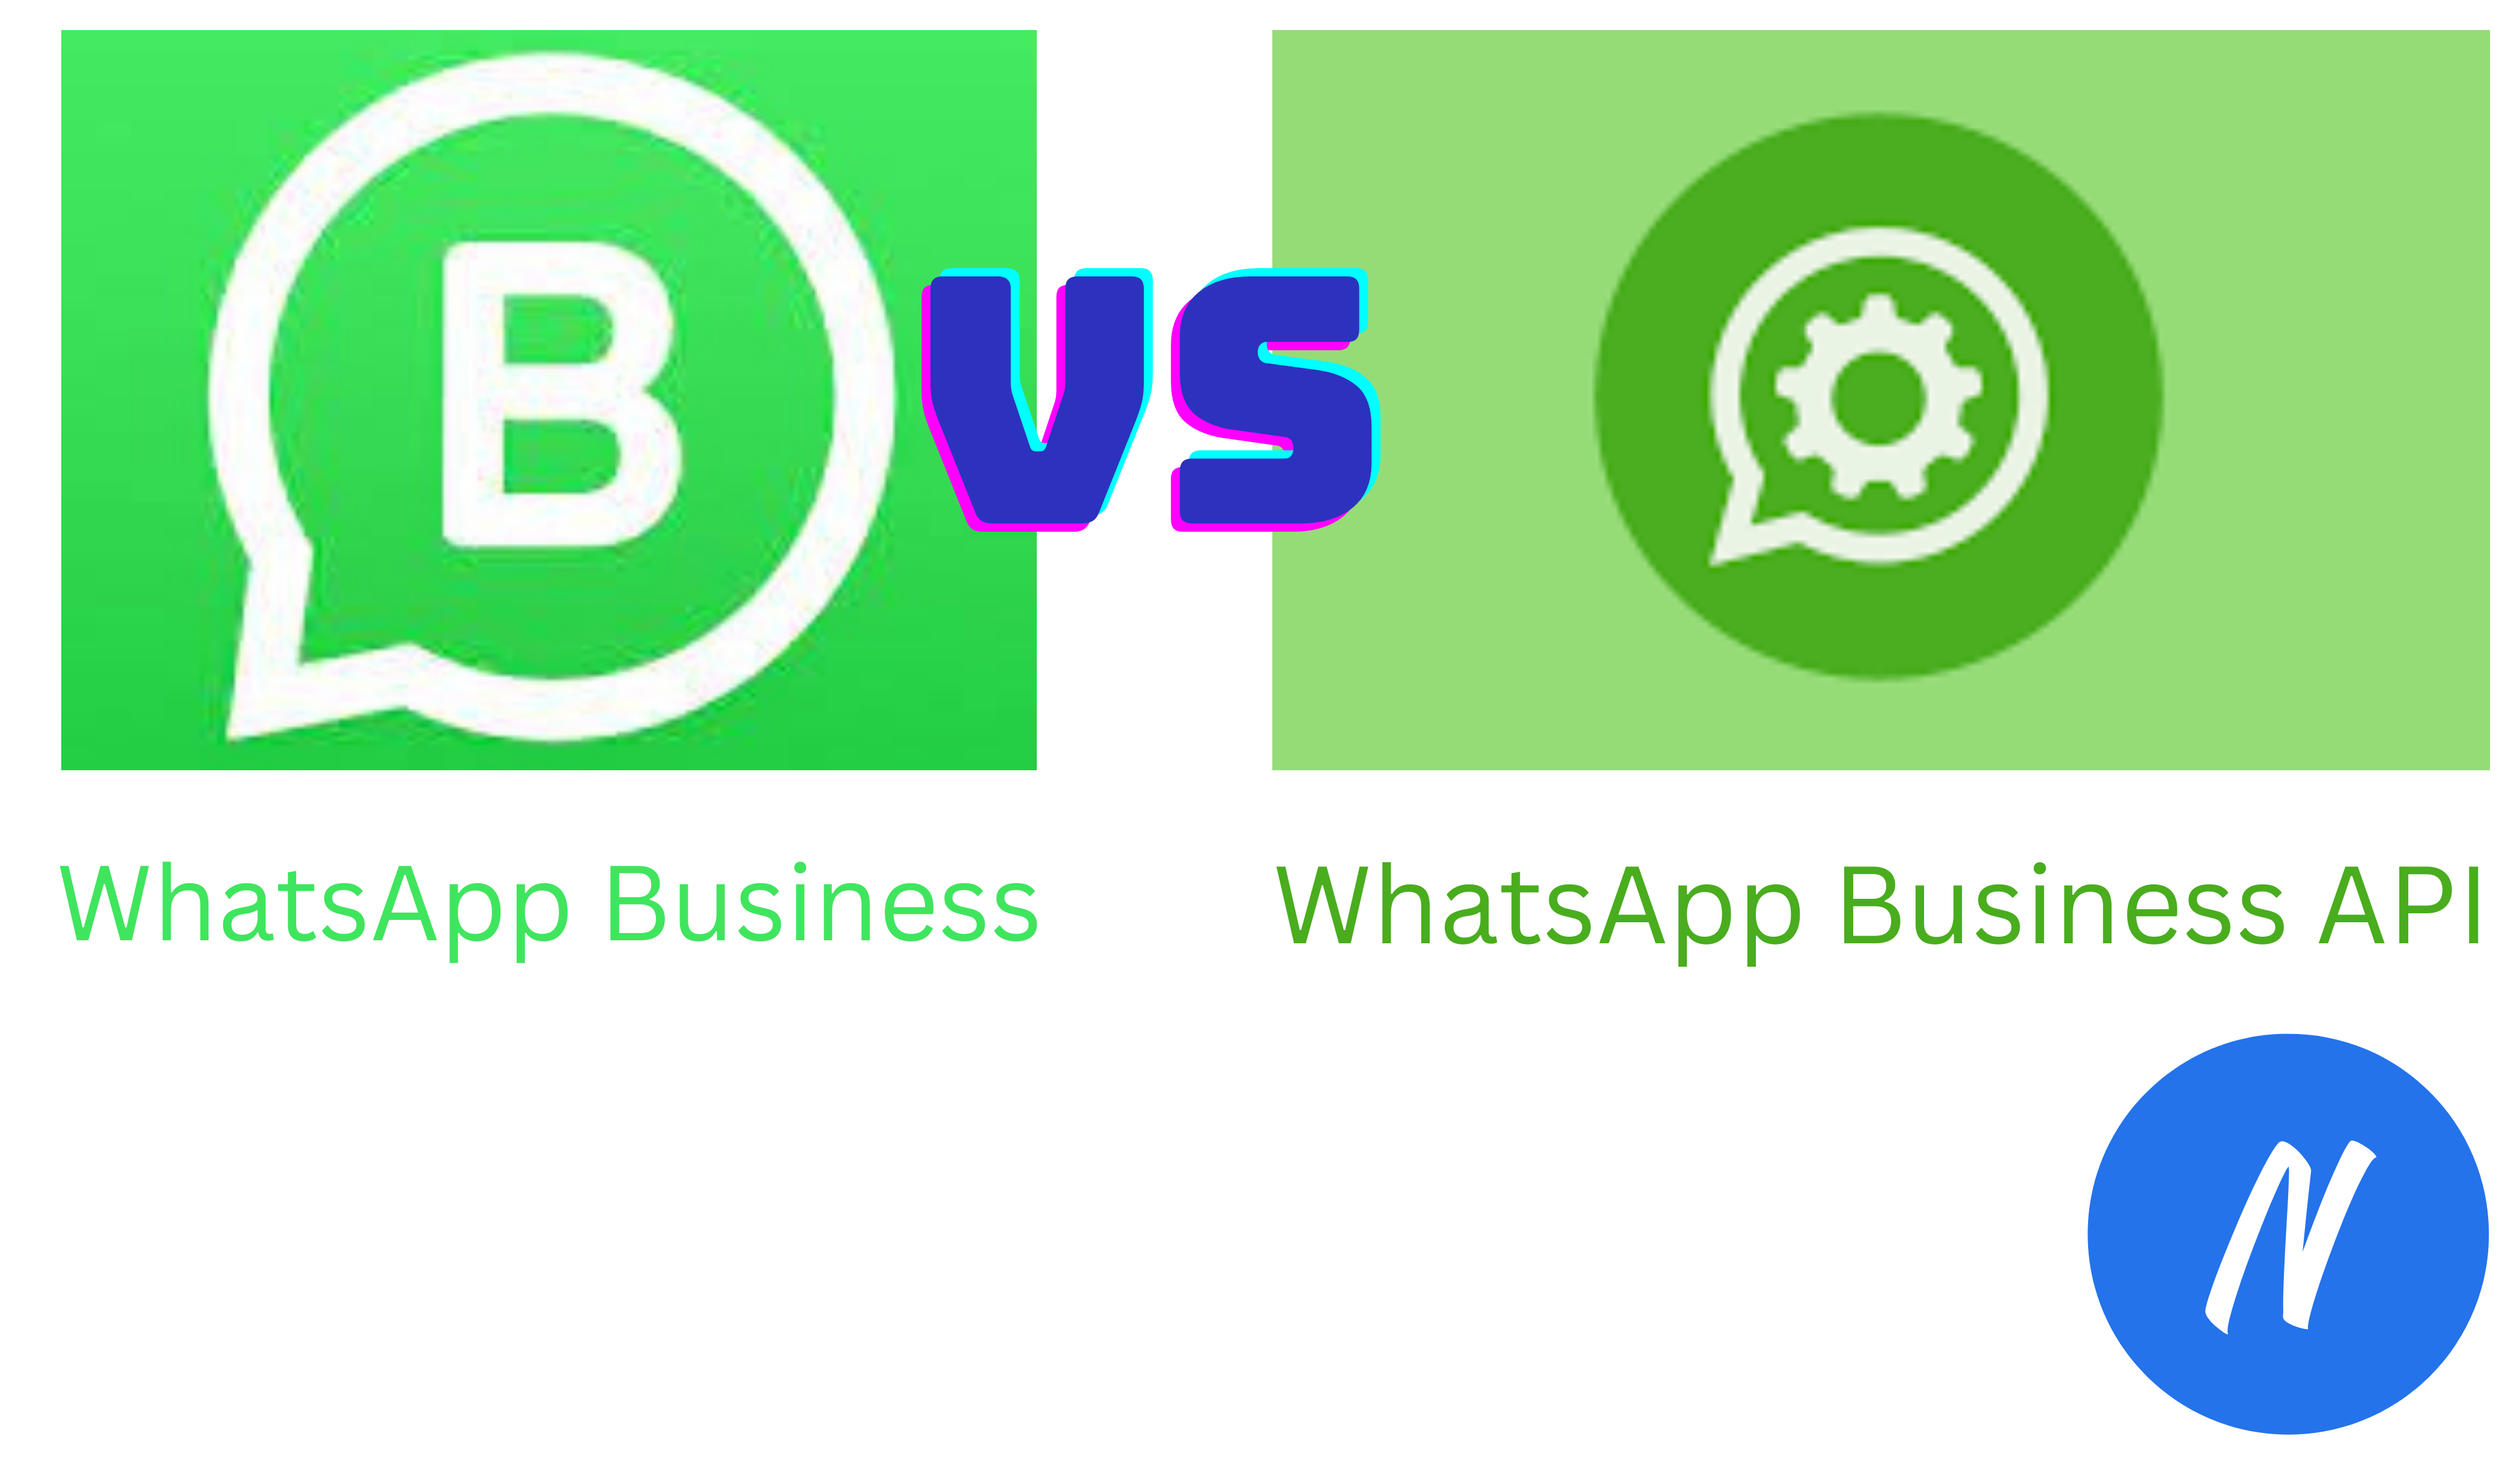 Whatsapp business app vs API